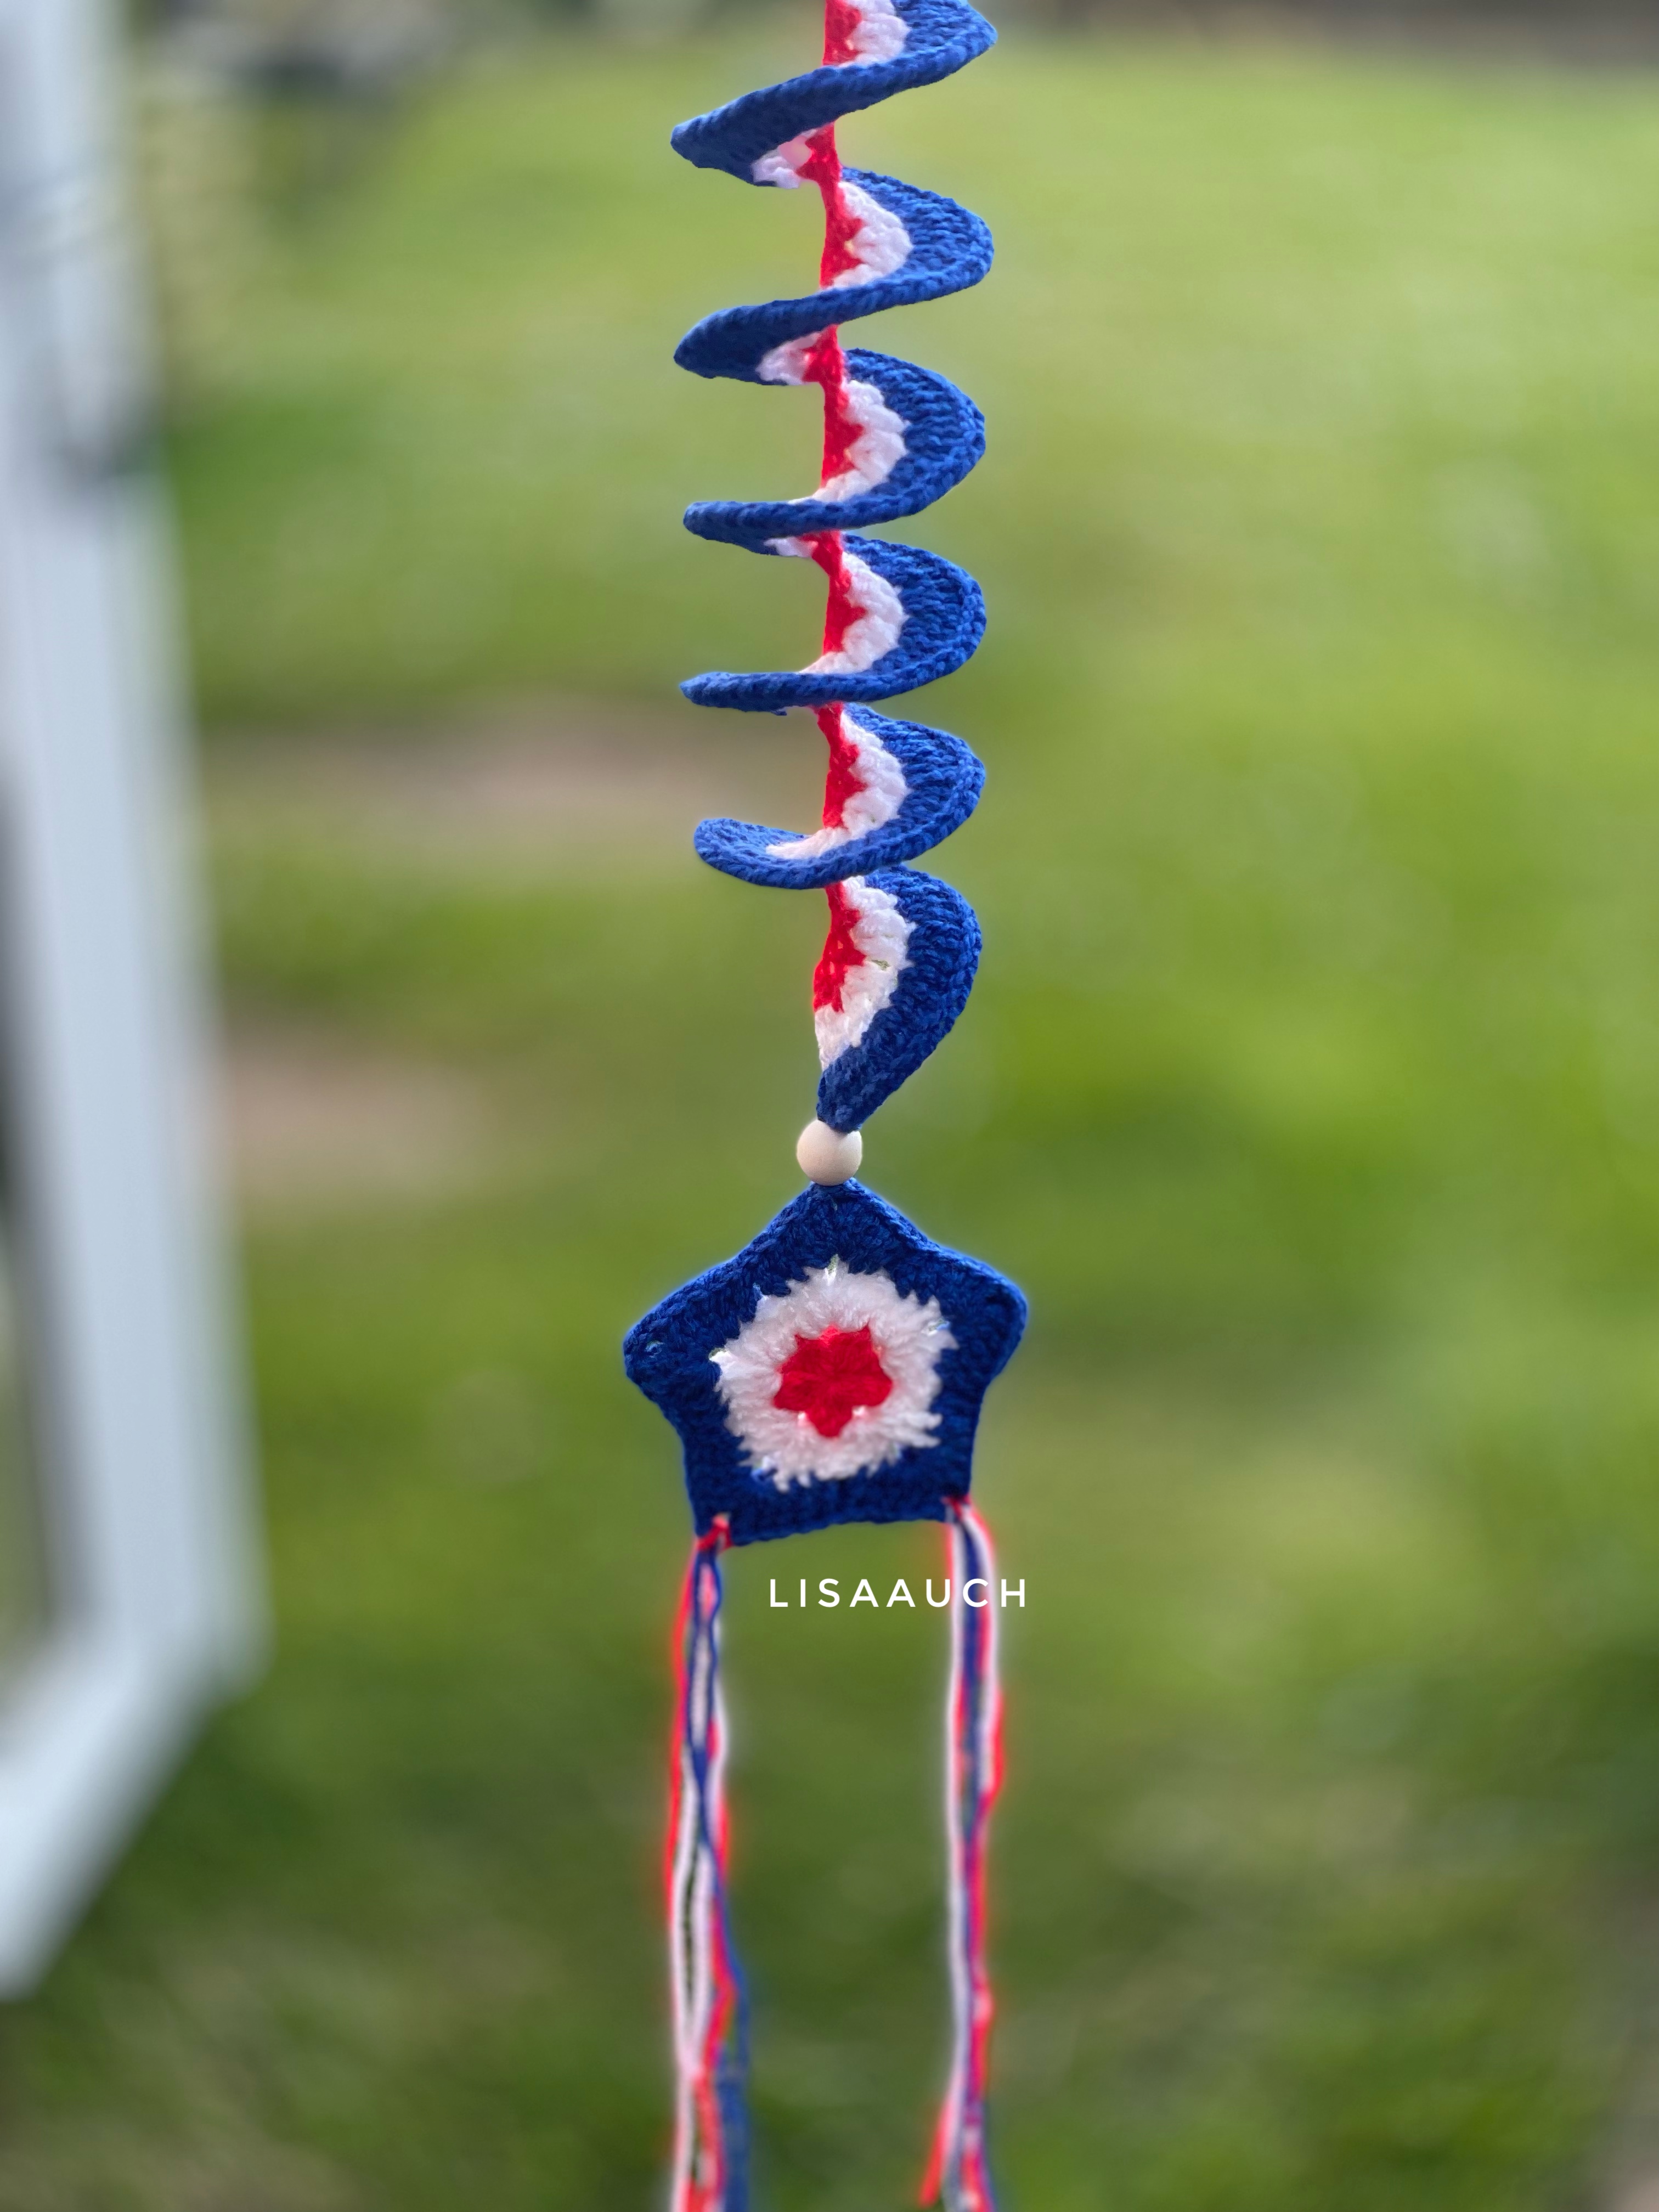 Wind Spinner, Quick Easy Beginners Crochet Tutorial, Craft Ideas